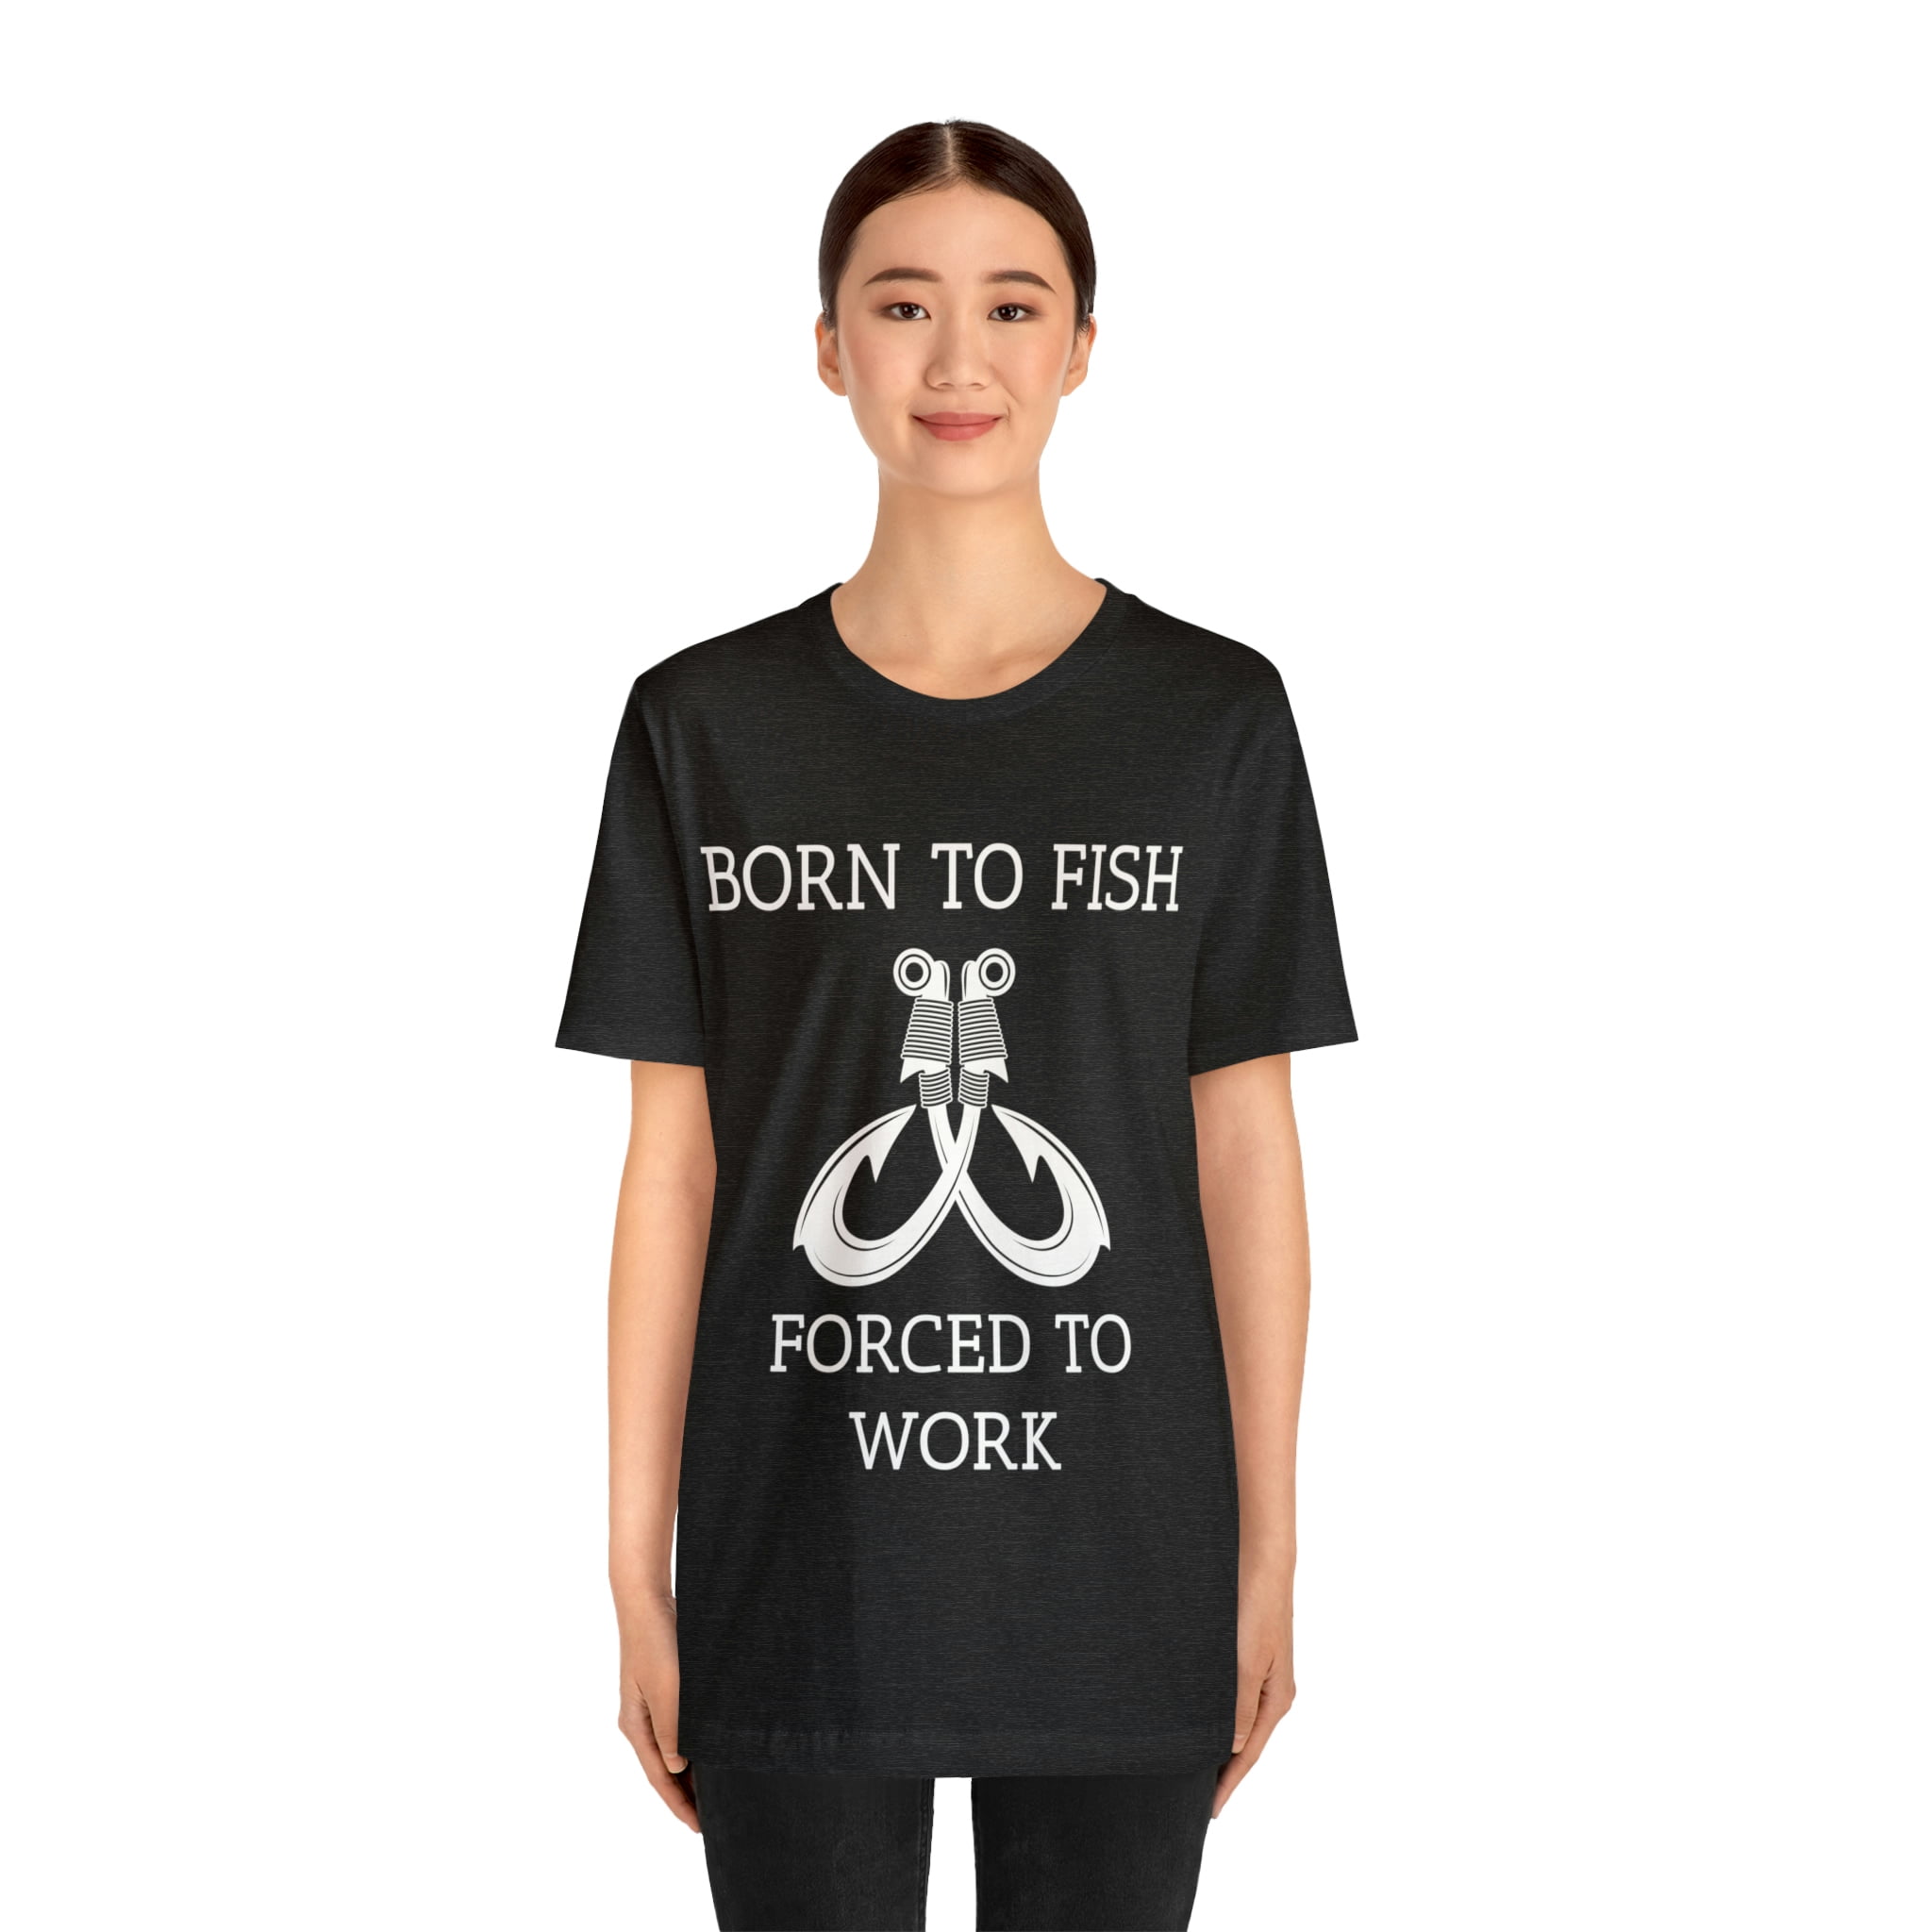 Born to Fish forced to Work Shirt, Fishing T-Shirt